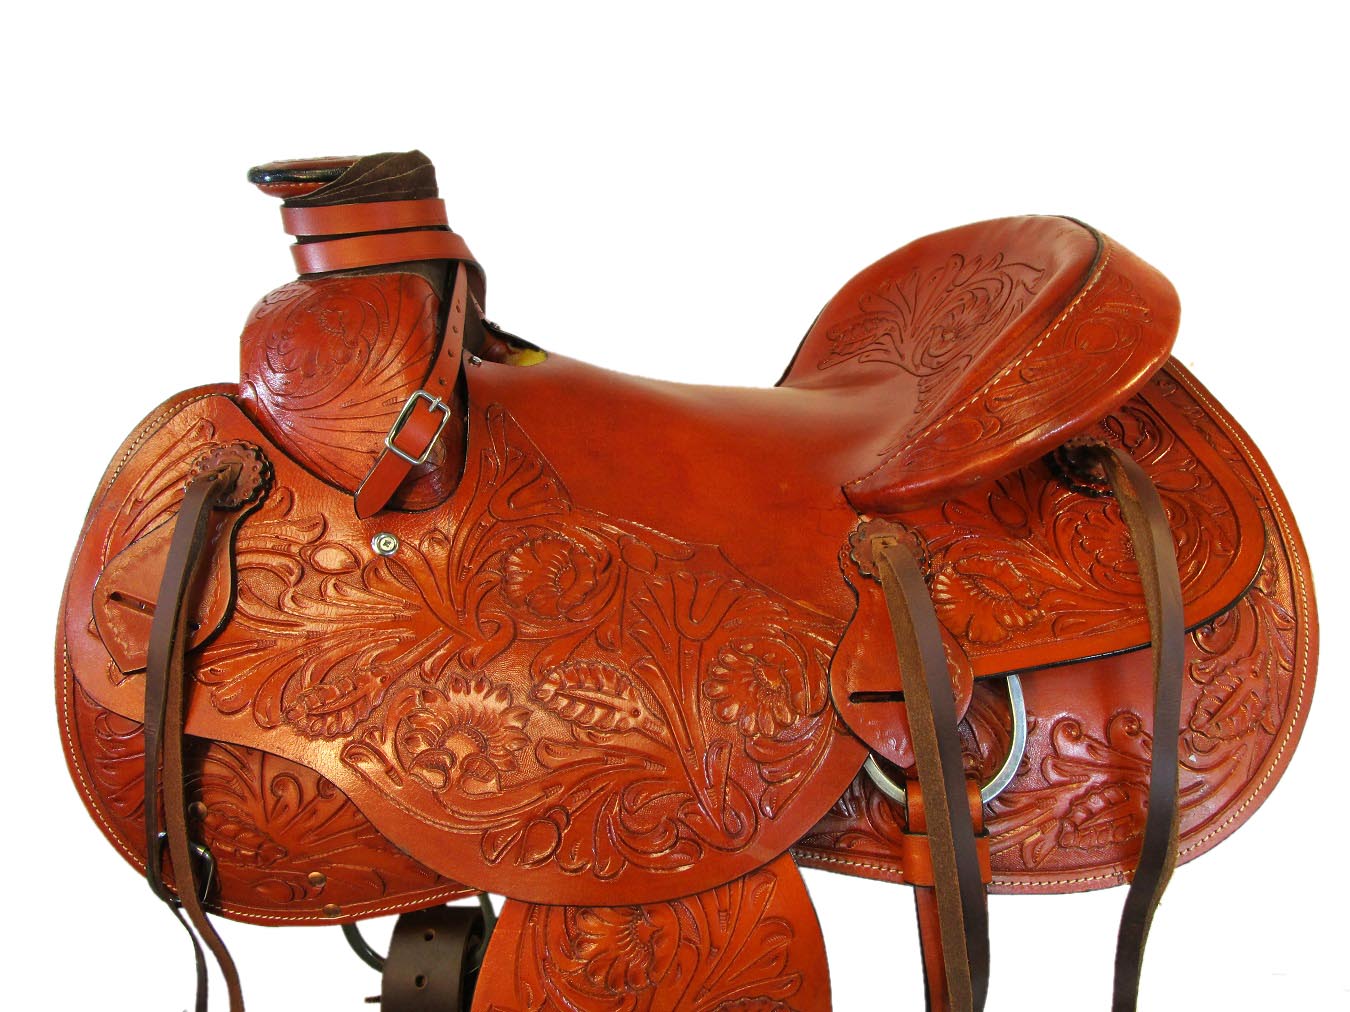 16 Fully tooled Buffalo roper style saddle with suede leather seat